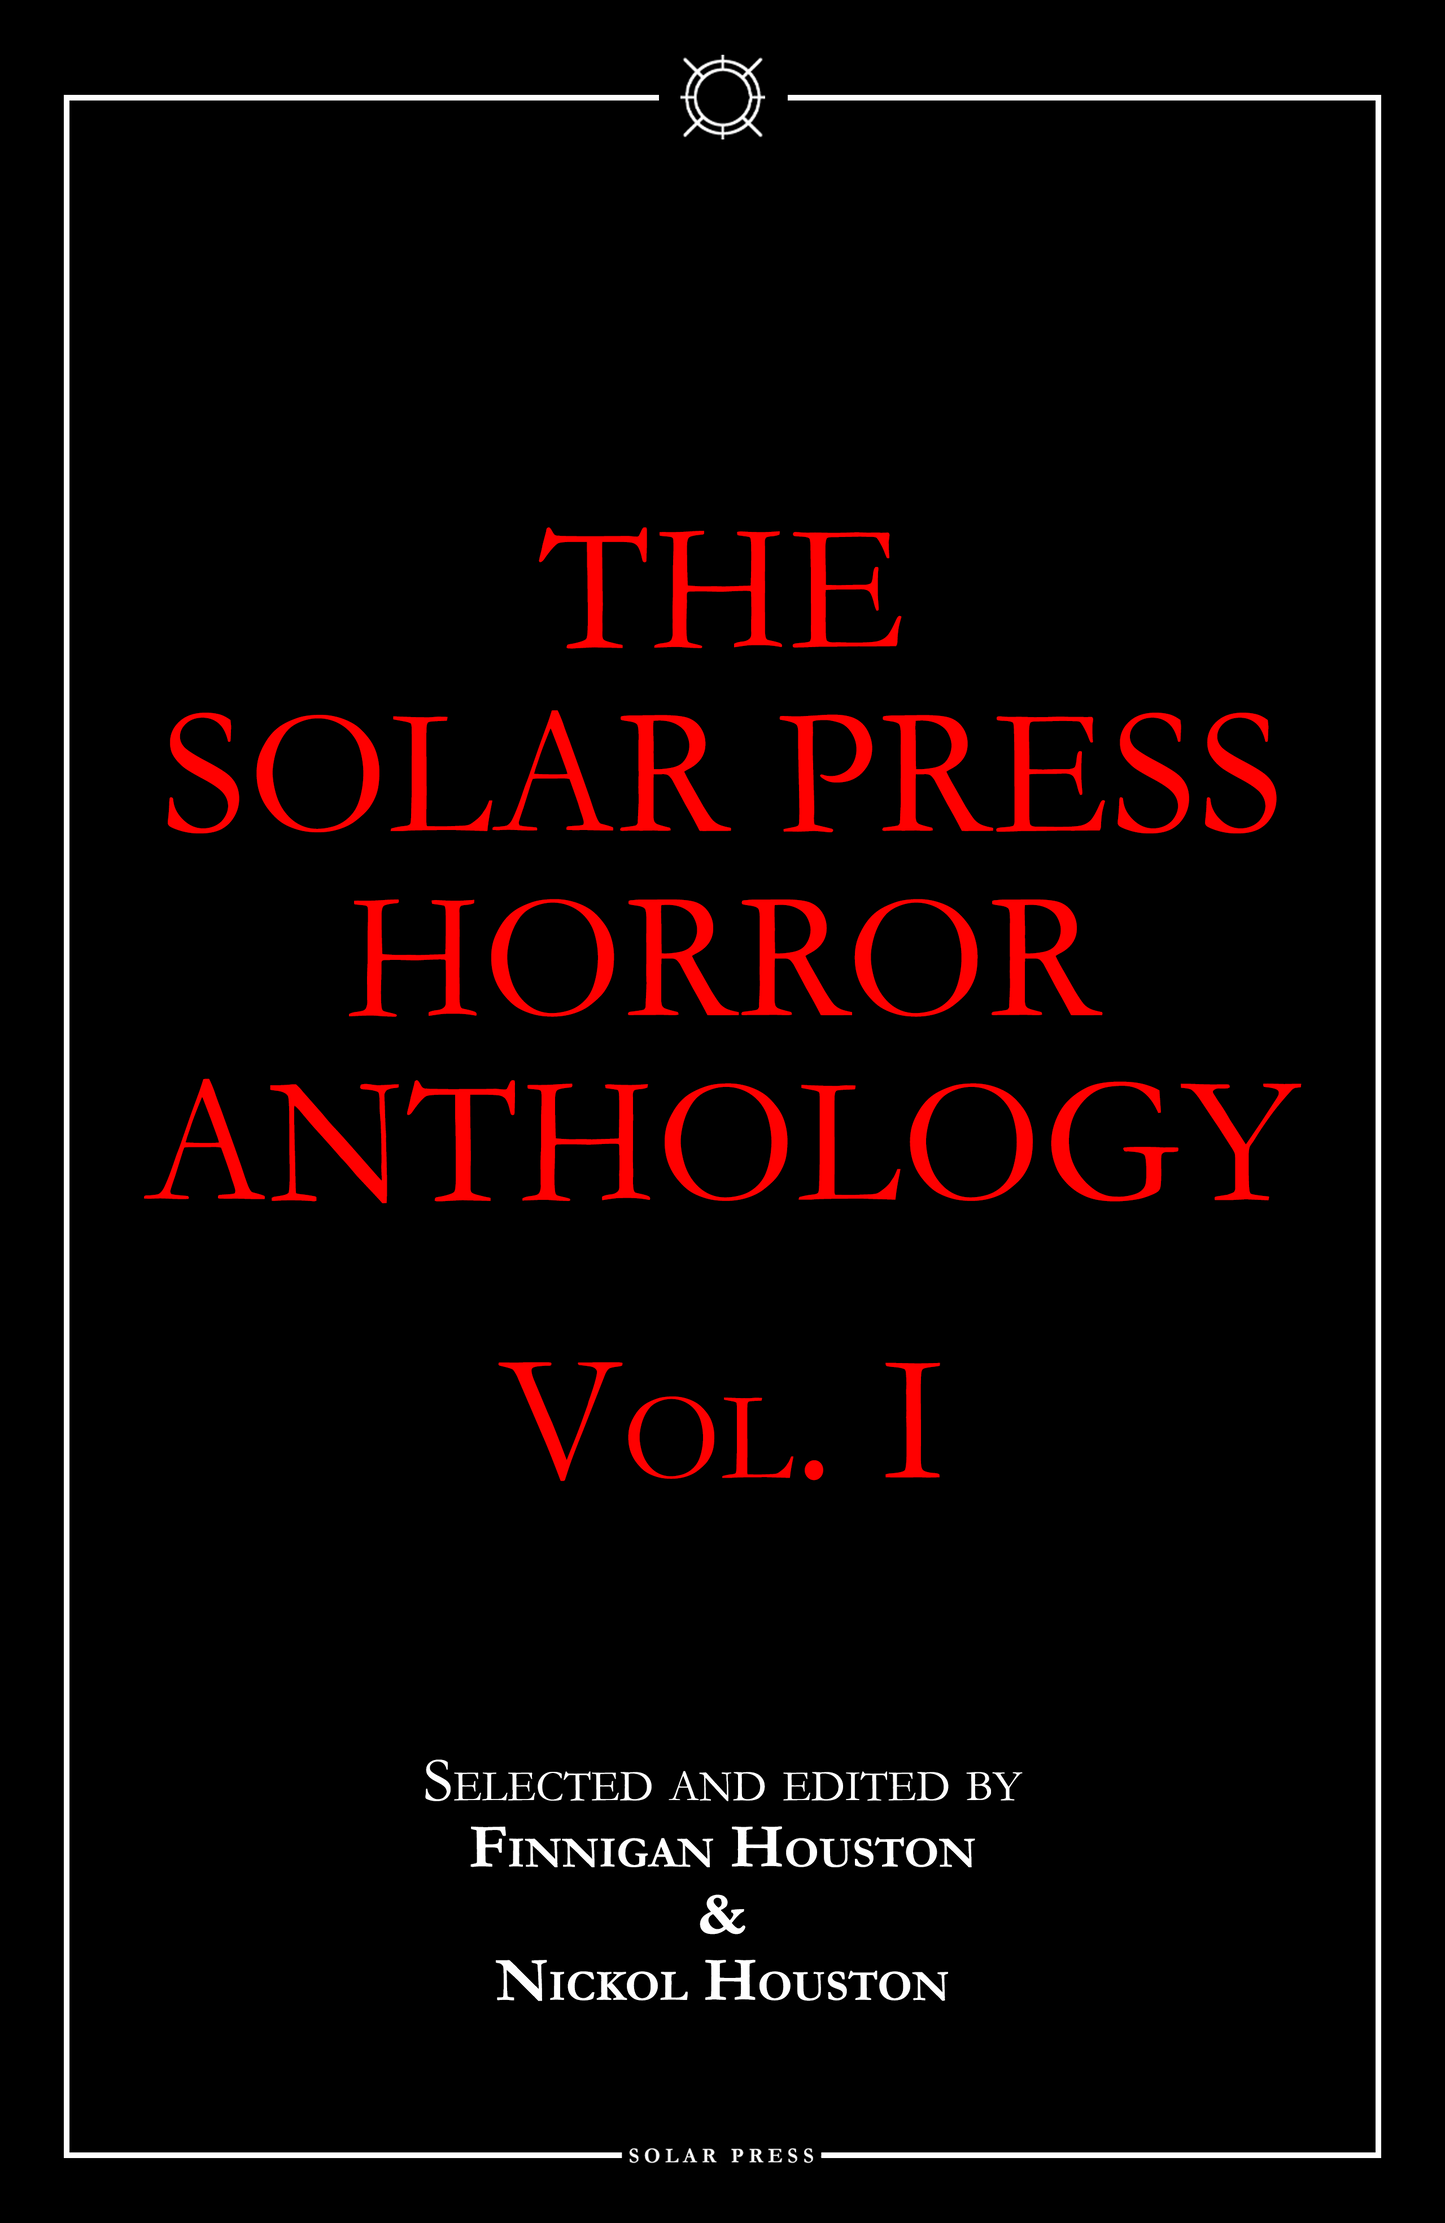 The Solar Press Horror Anthology Vol. I